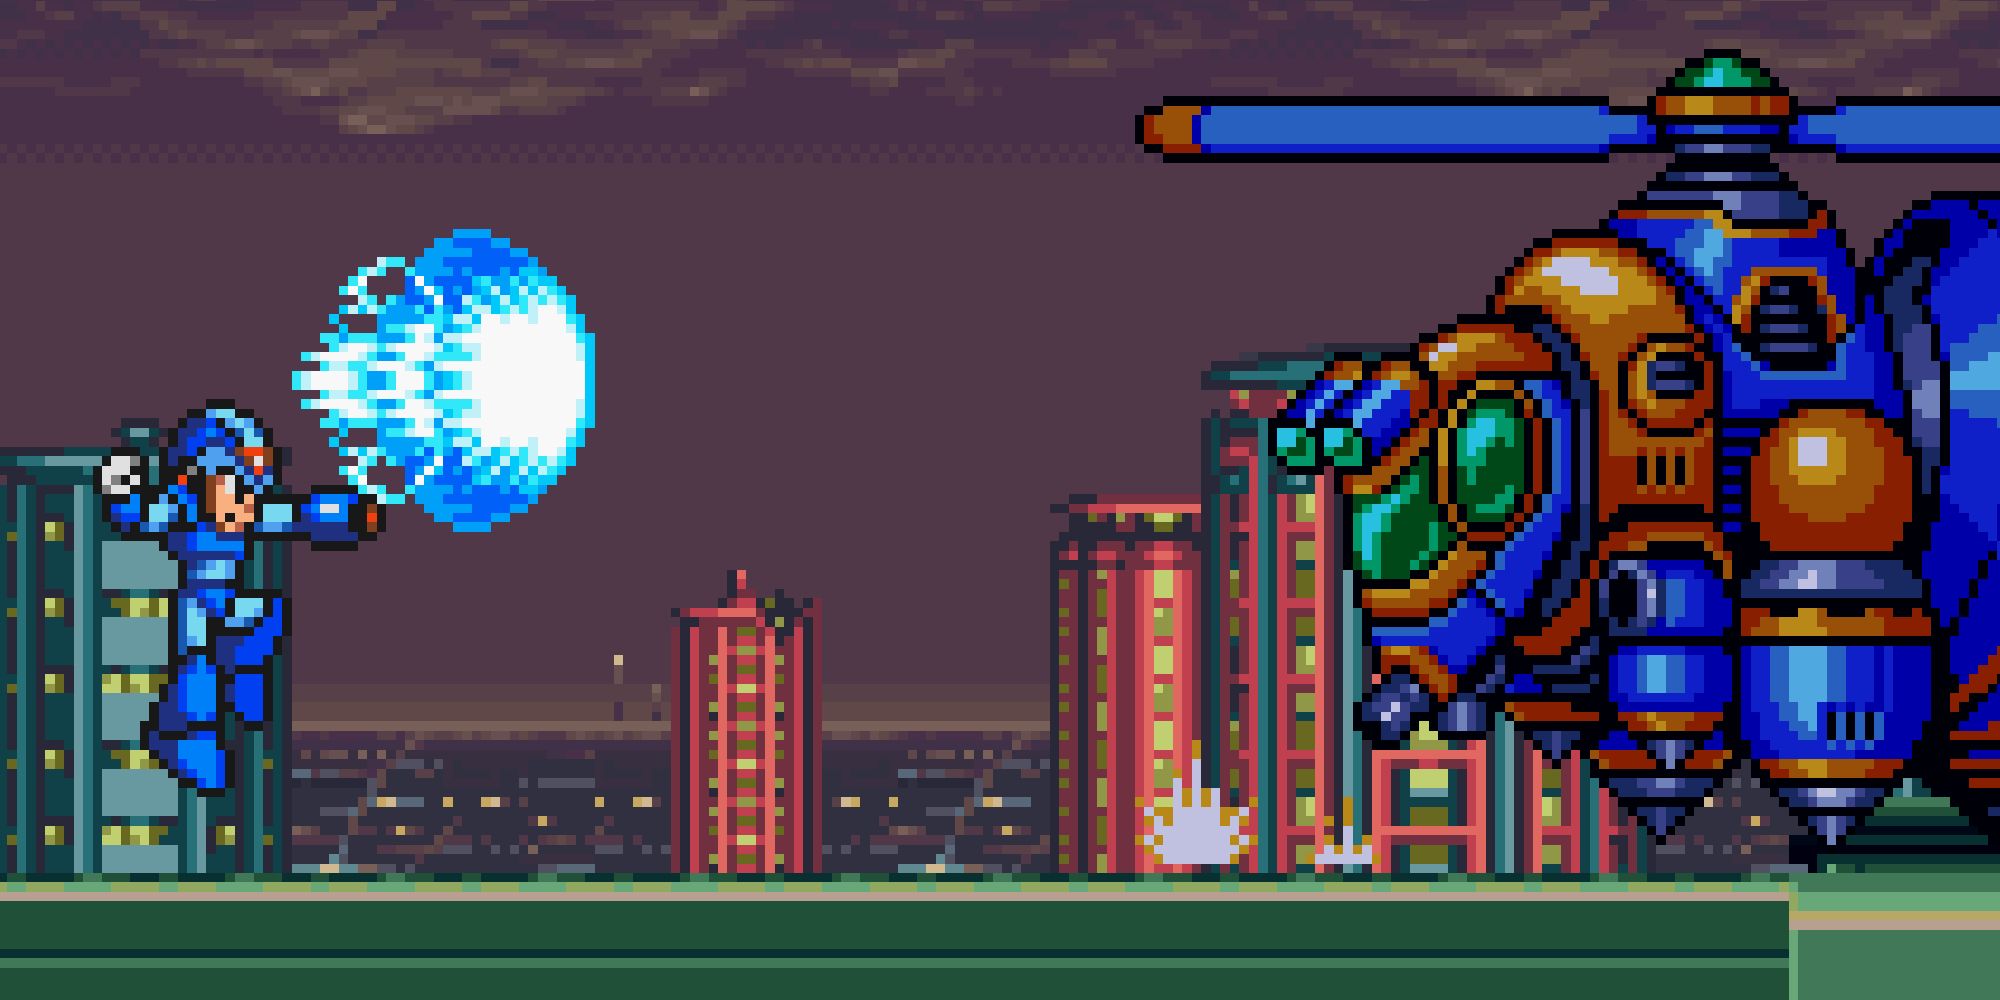 Mega Man firing a charge blast at a bee robot